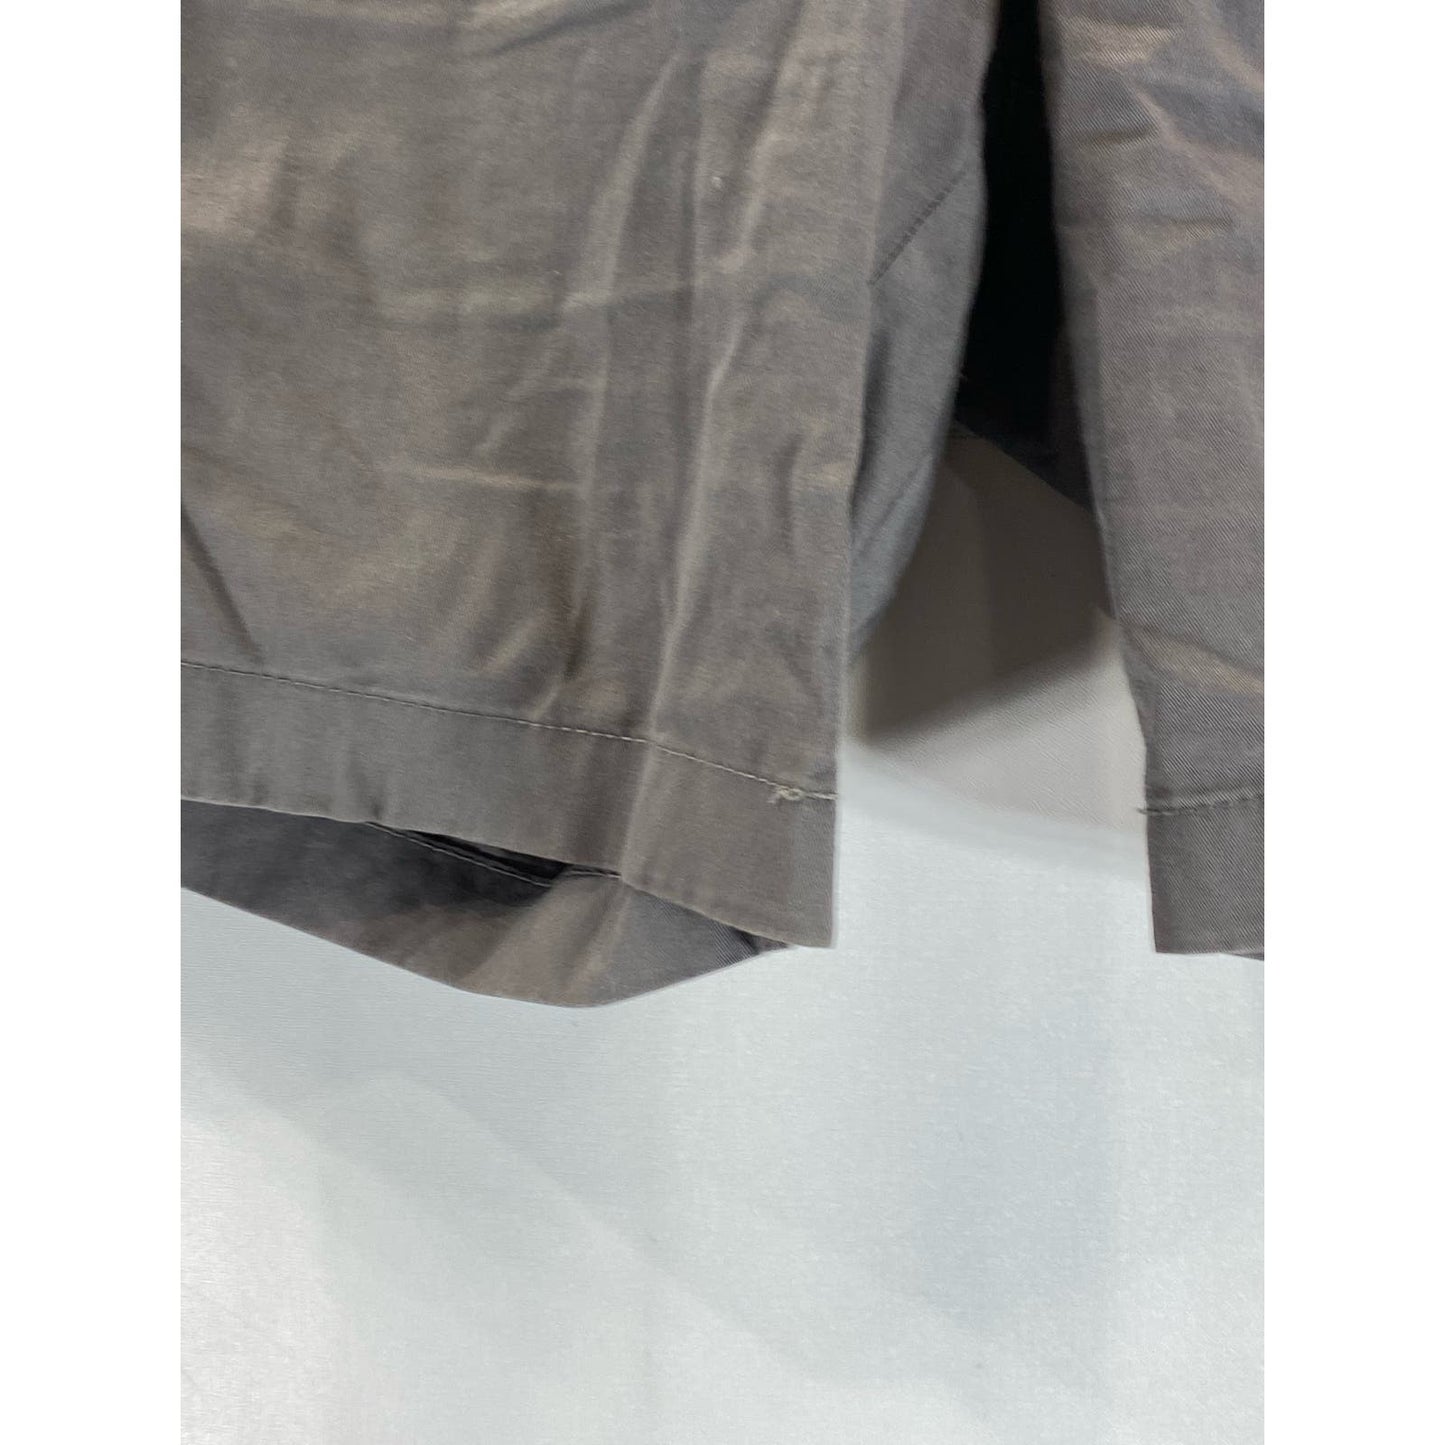 J.CREW Men's Dark Grey Cotton Regular-Fit 7" Chino Shorts SZ 29